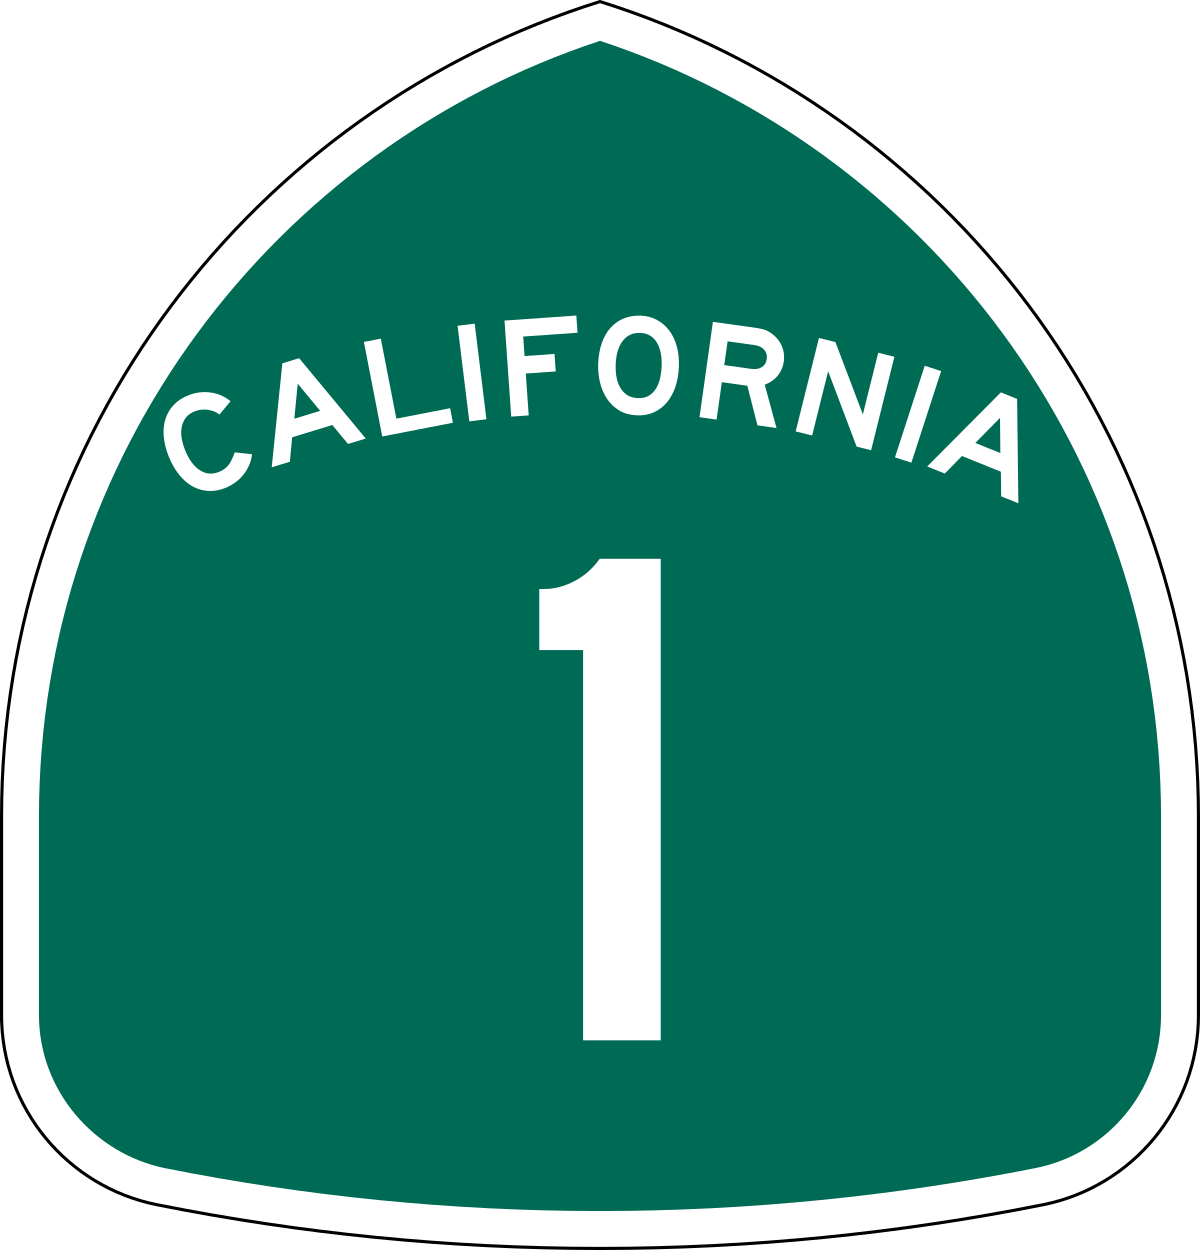 Fange Bliver værre hurtig California State Route 1 - Wikipedia